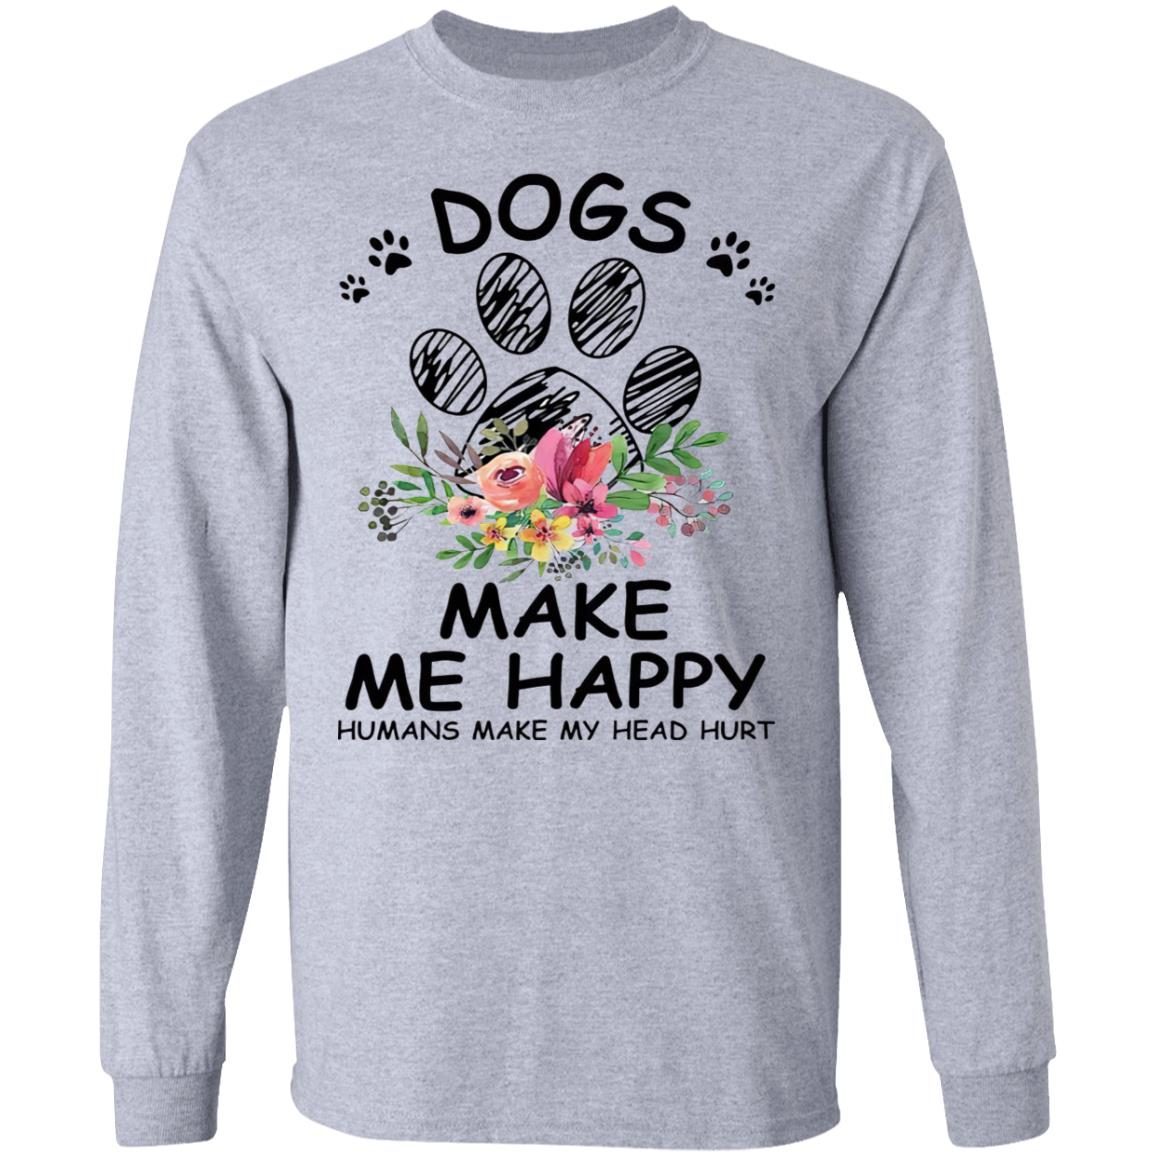 Dogs make me happy humans make my head hurt shirts